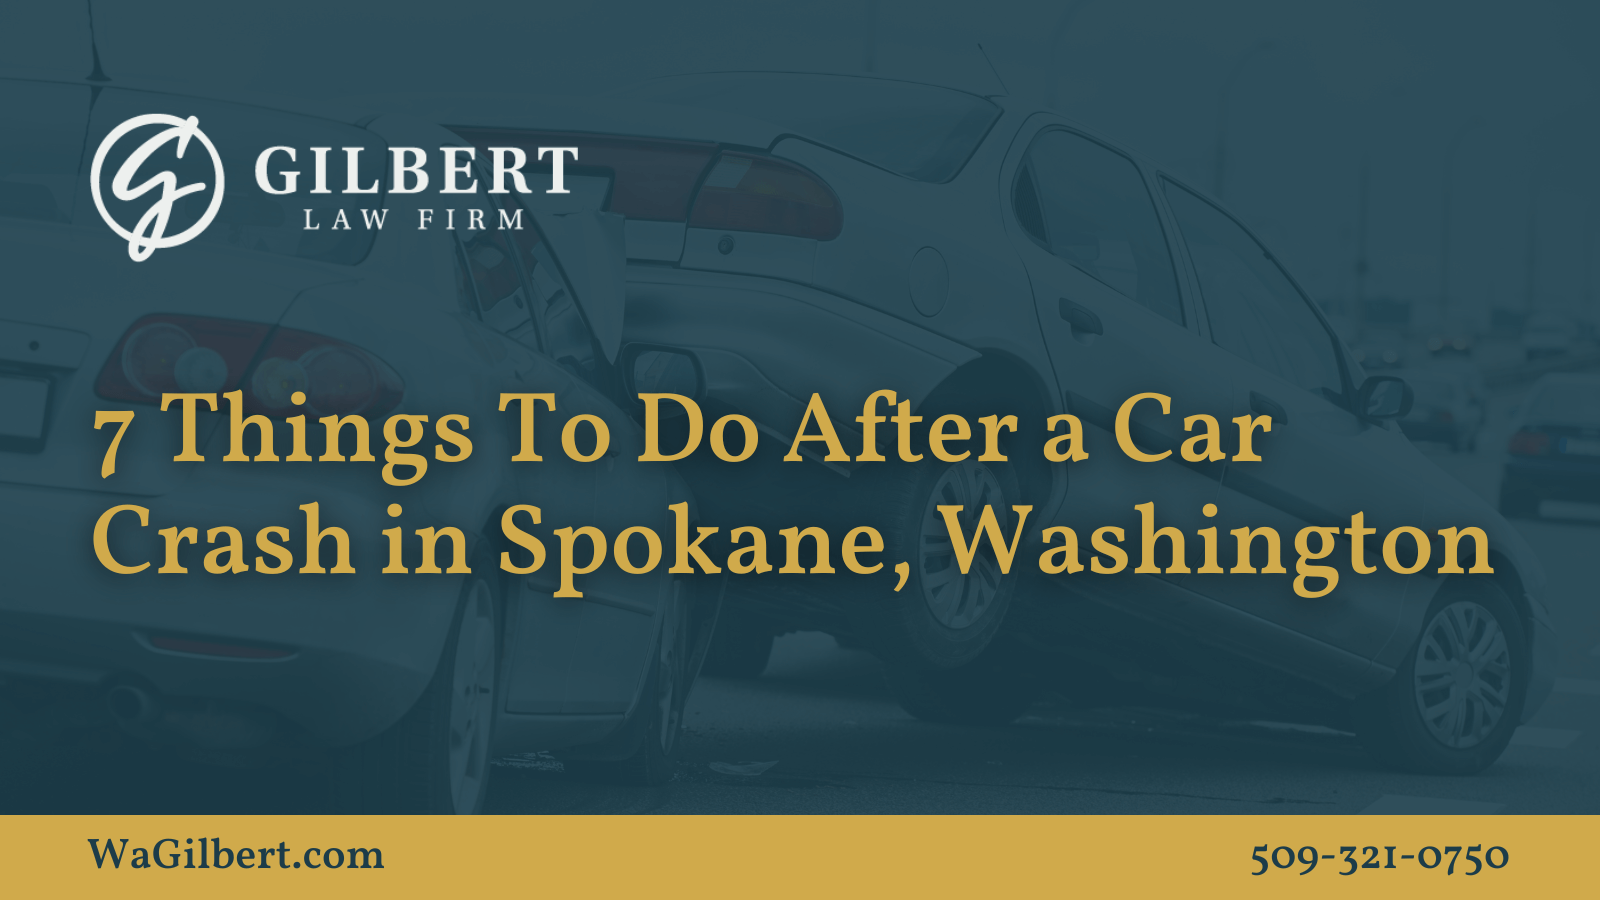 7 Things To Do After a Car Crash in Spokane Washington - Gilbert Law Firm Spokane Washington